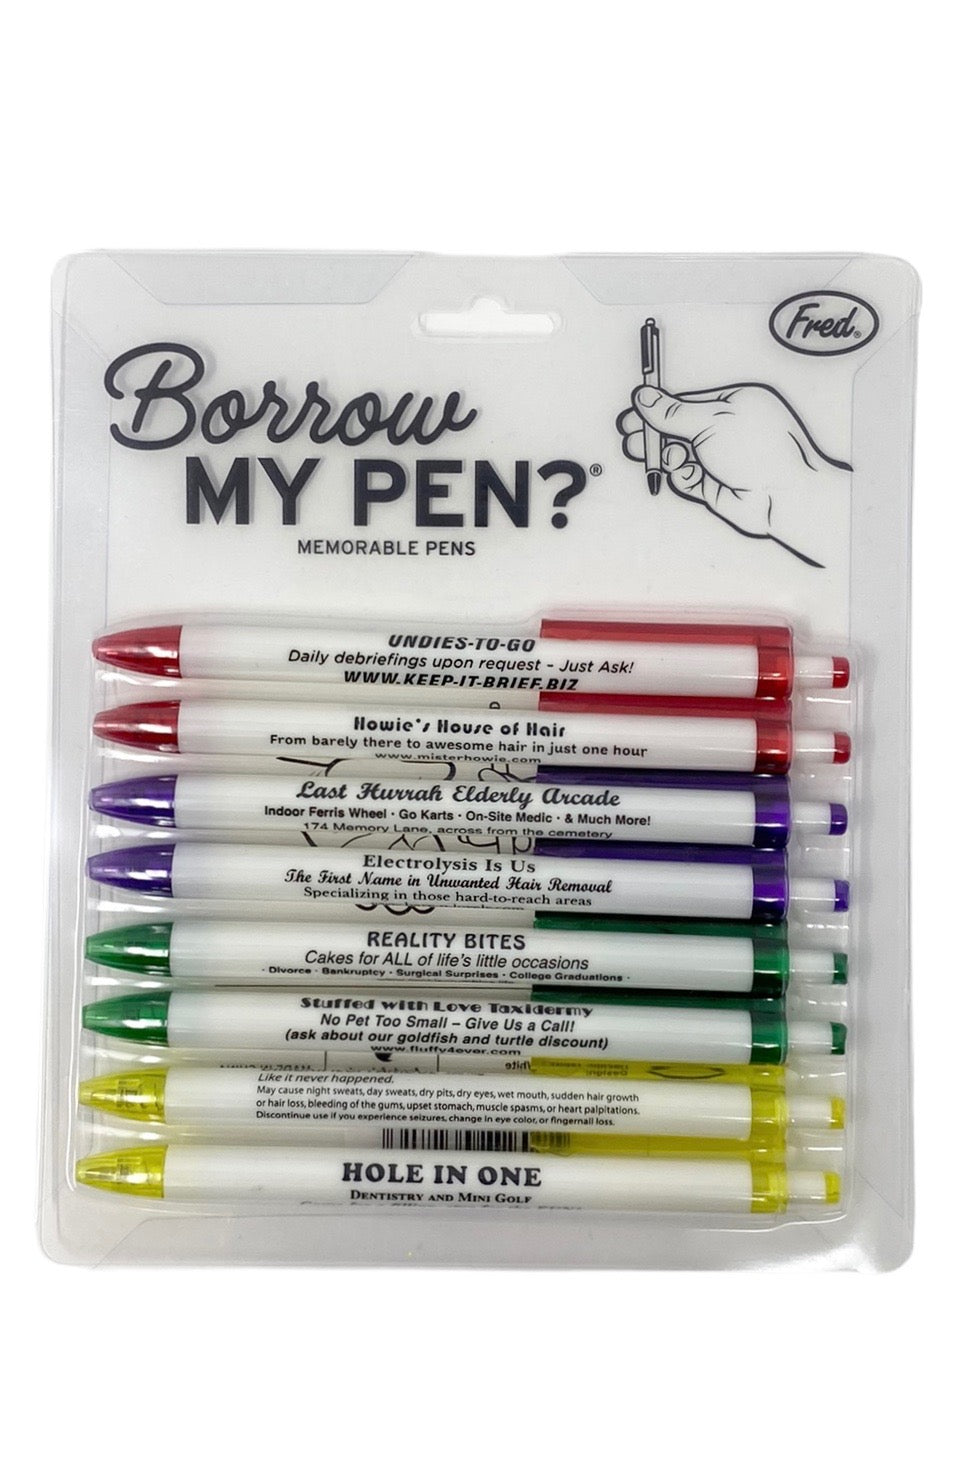 Borrow My Pen?